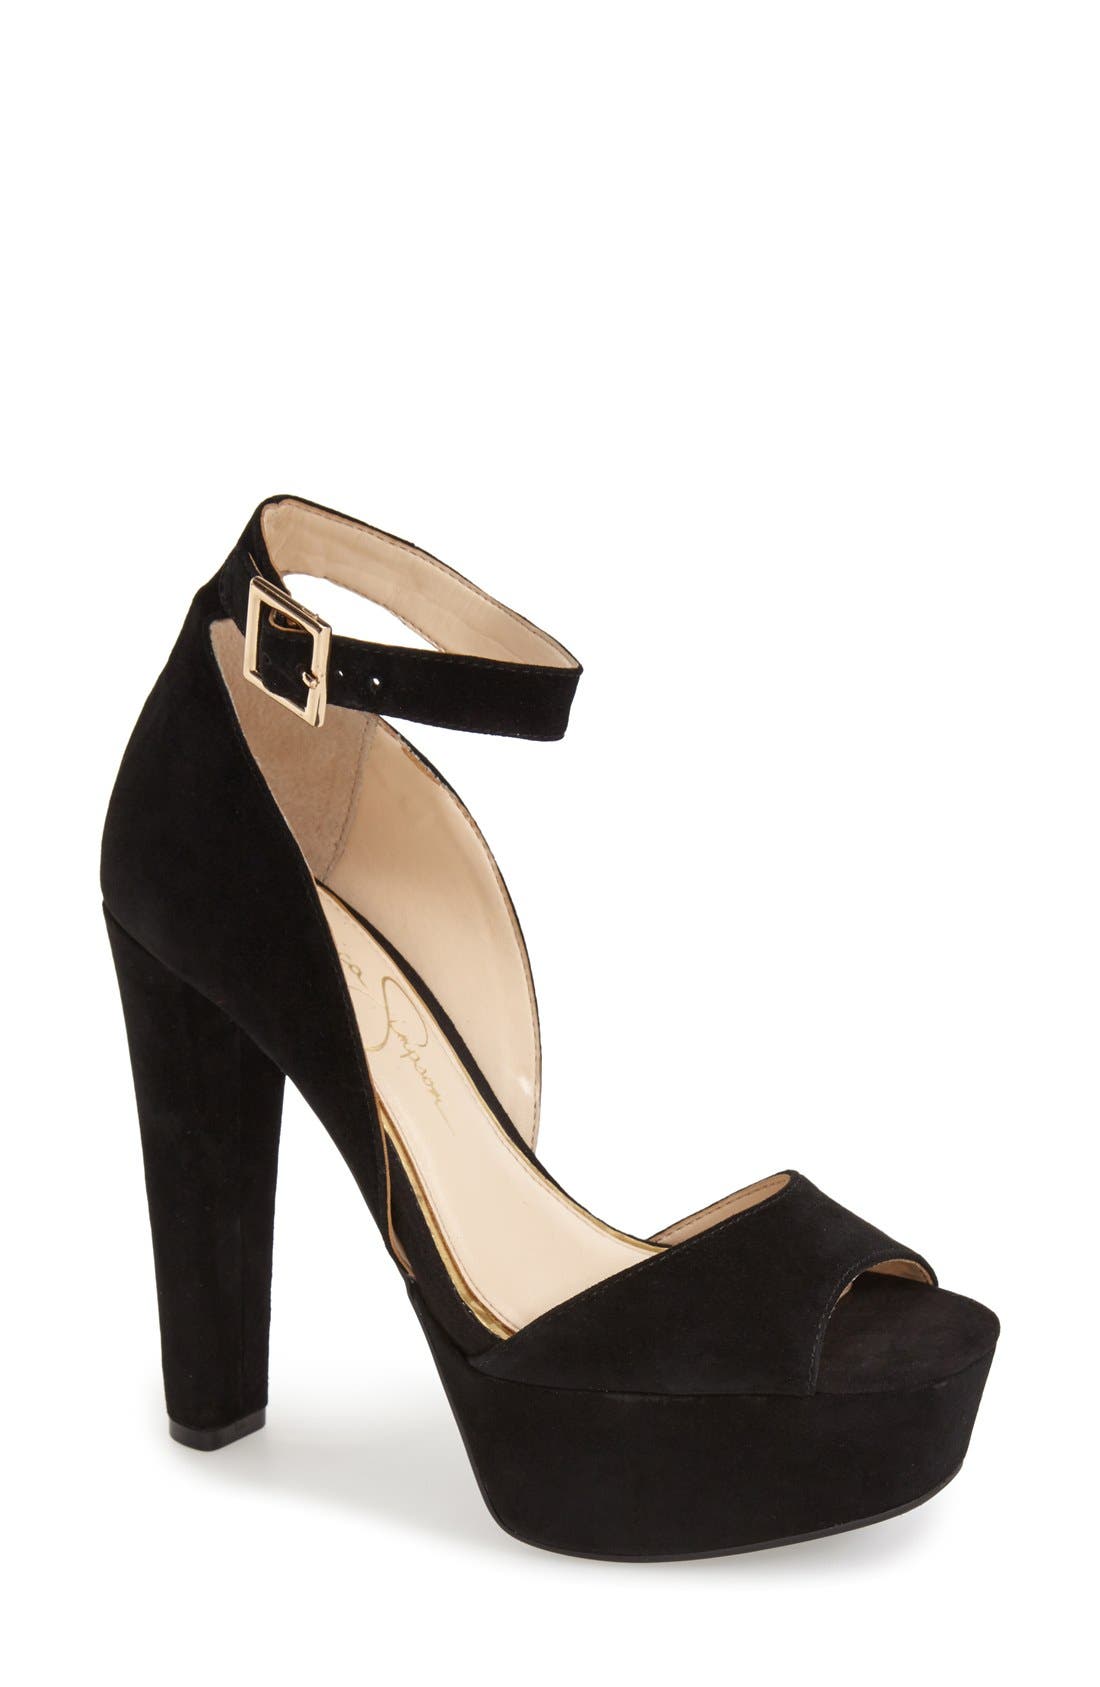 jessica simpson black ankle strap heels